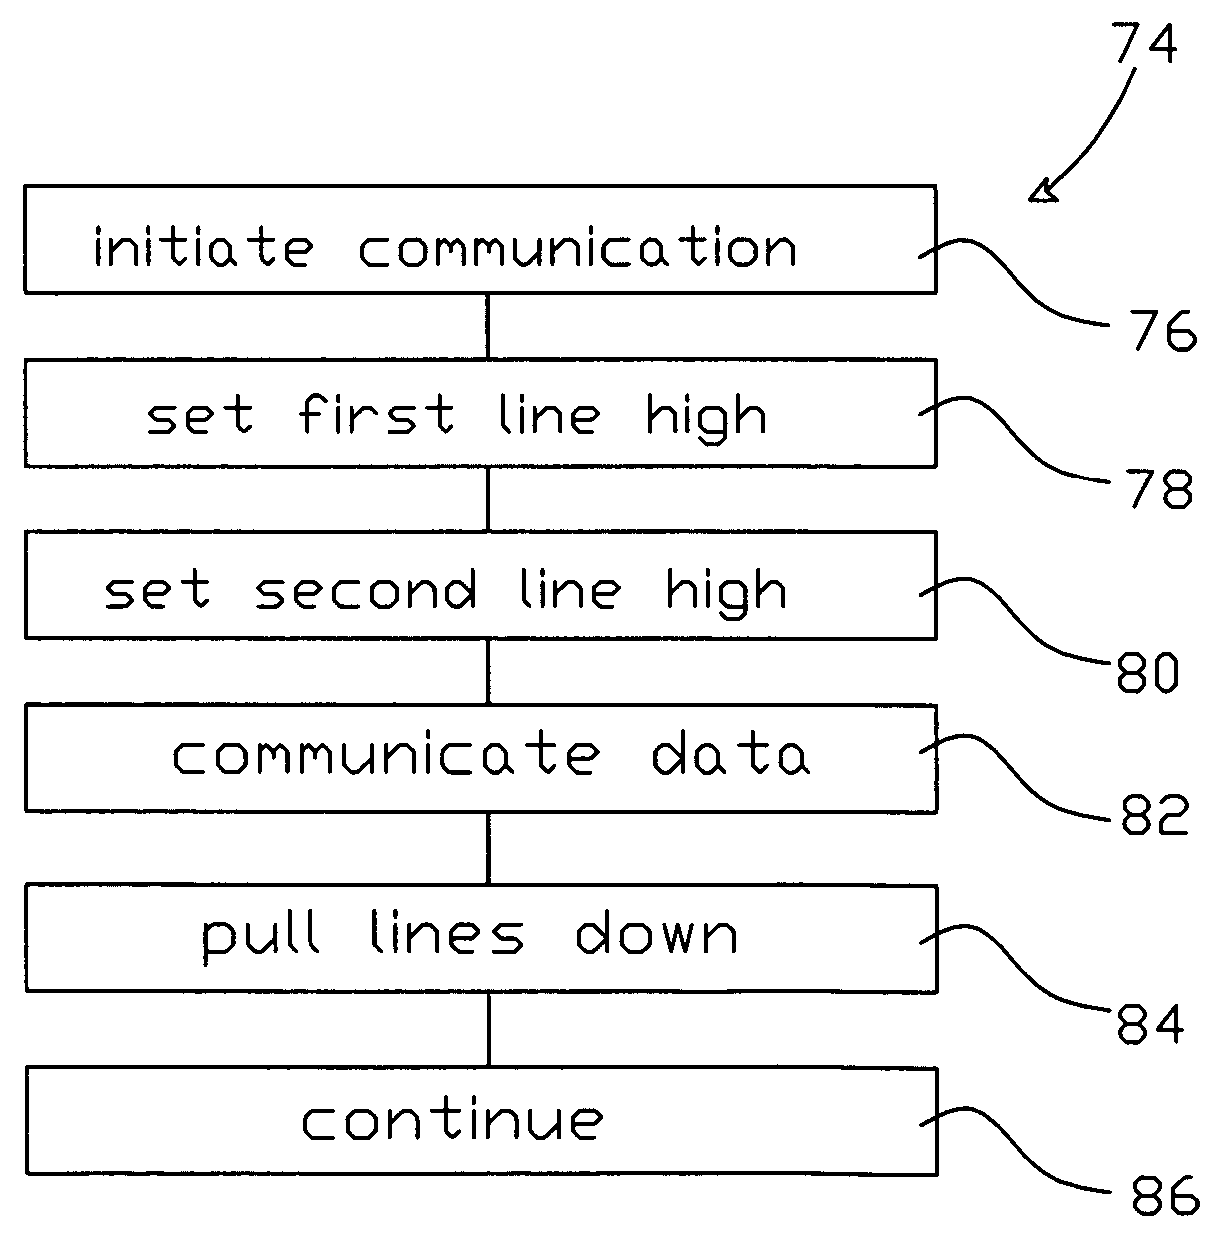 Asynchronous computer communication